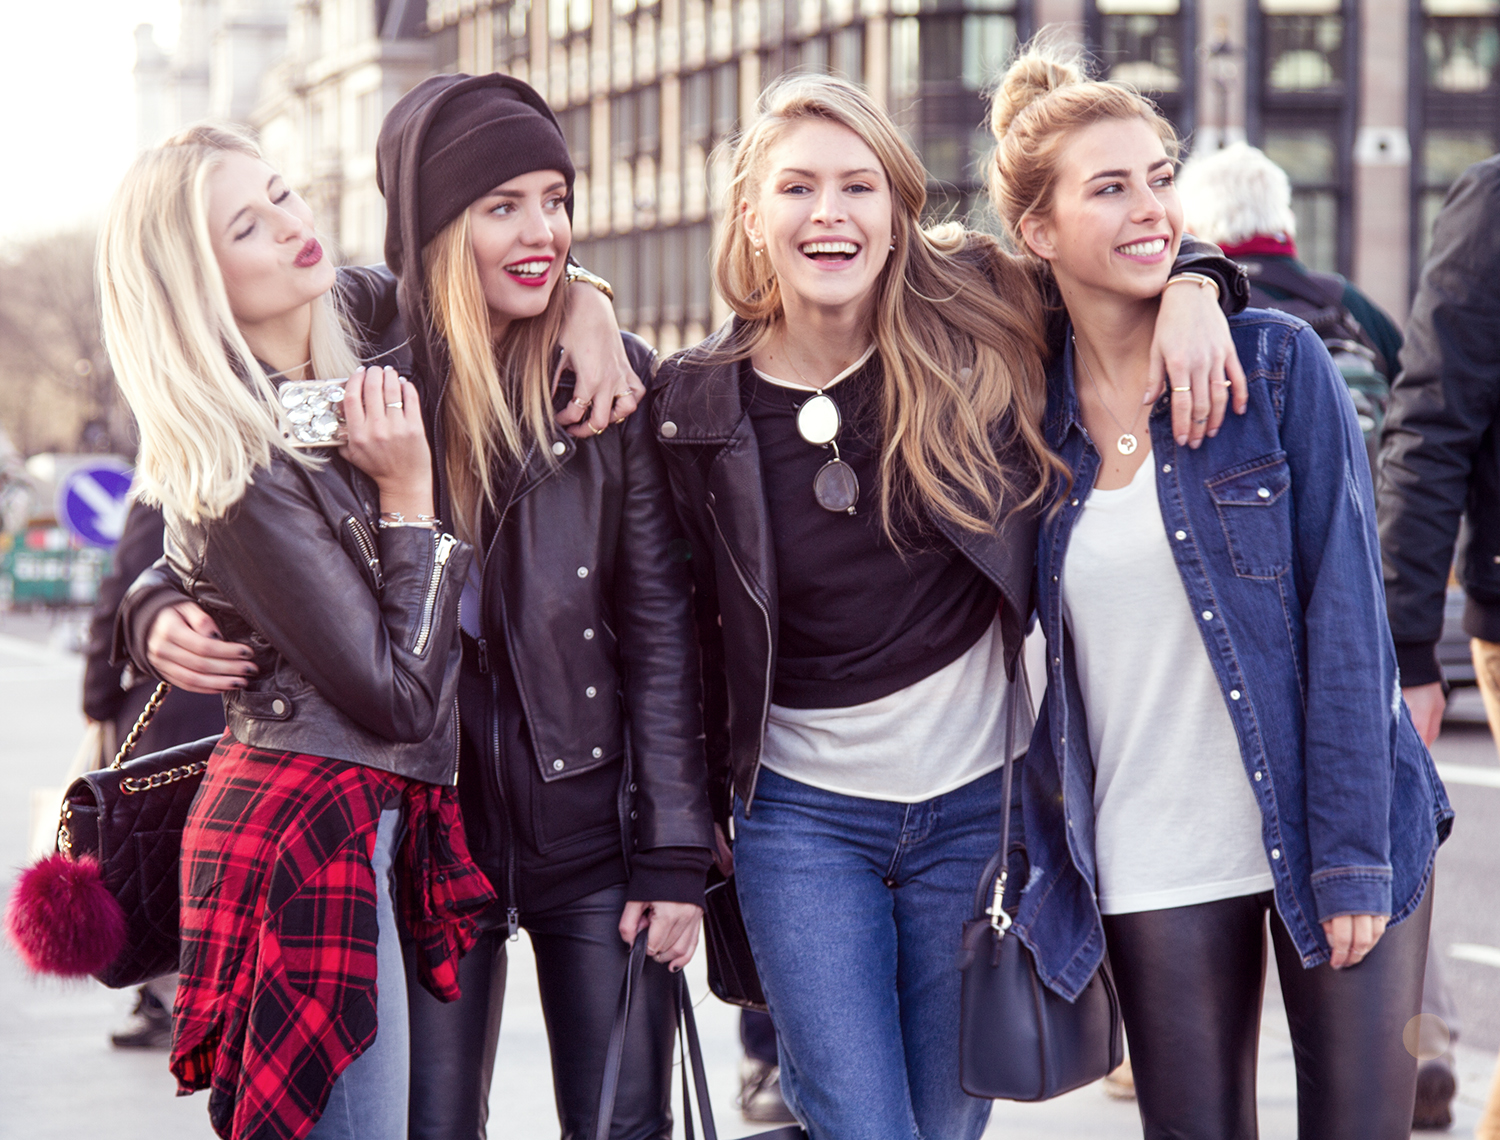 style_roulette_fashion_blogger_friendship_london_girls_blast_fun